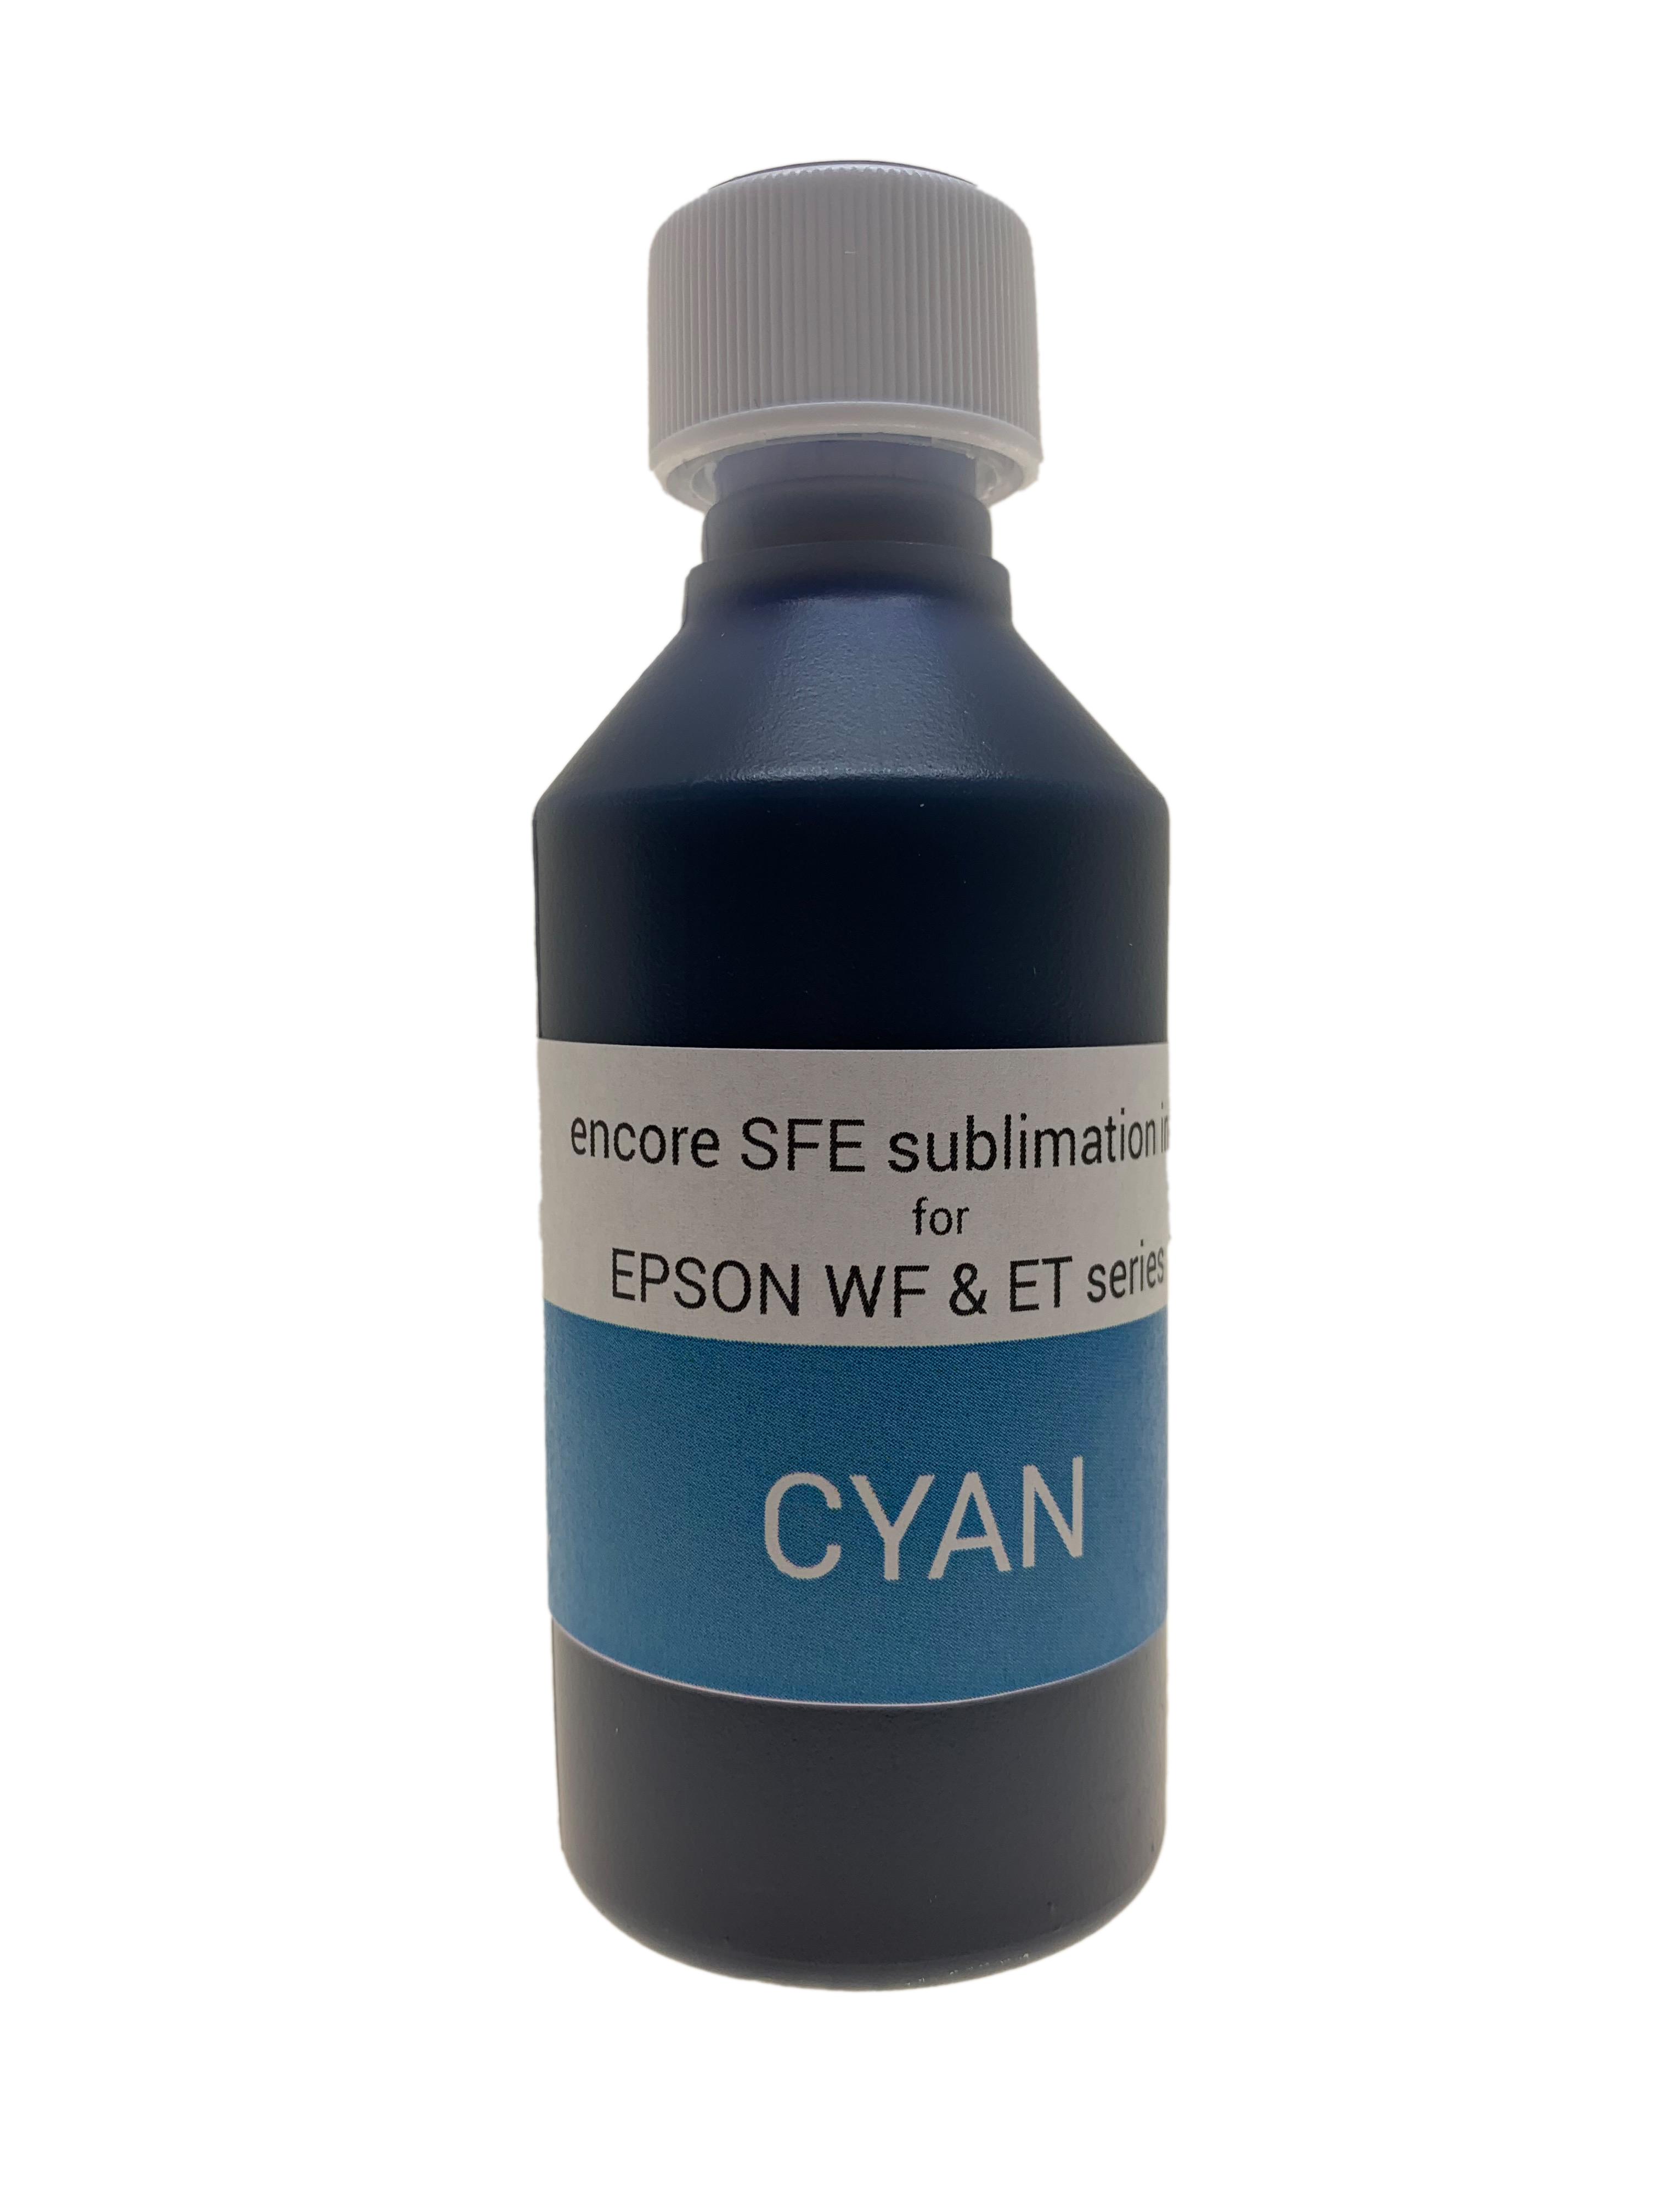 Epson Workforce (WF) Sublimation Ink Refill Cyan 60ml - Rainbowjet Digital